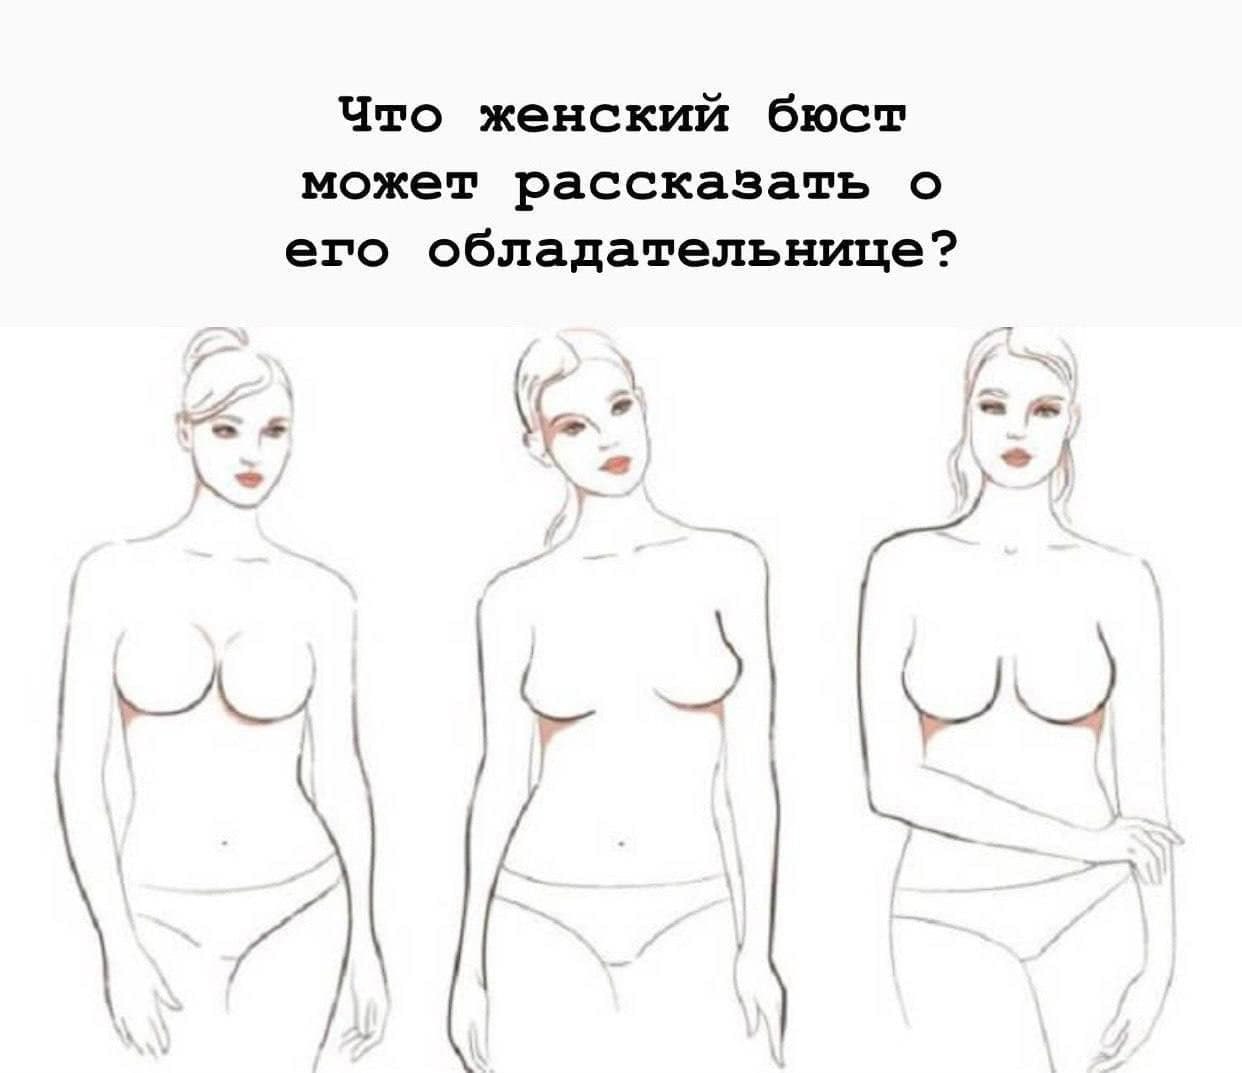 виды форм груди женщин фото 105